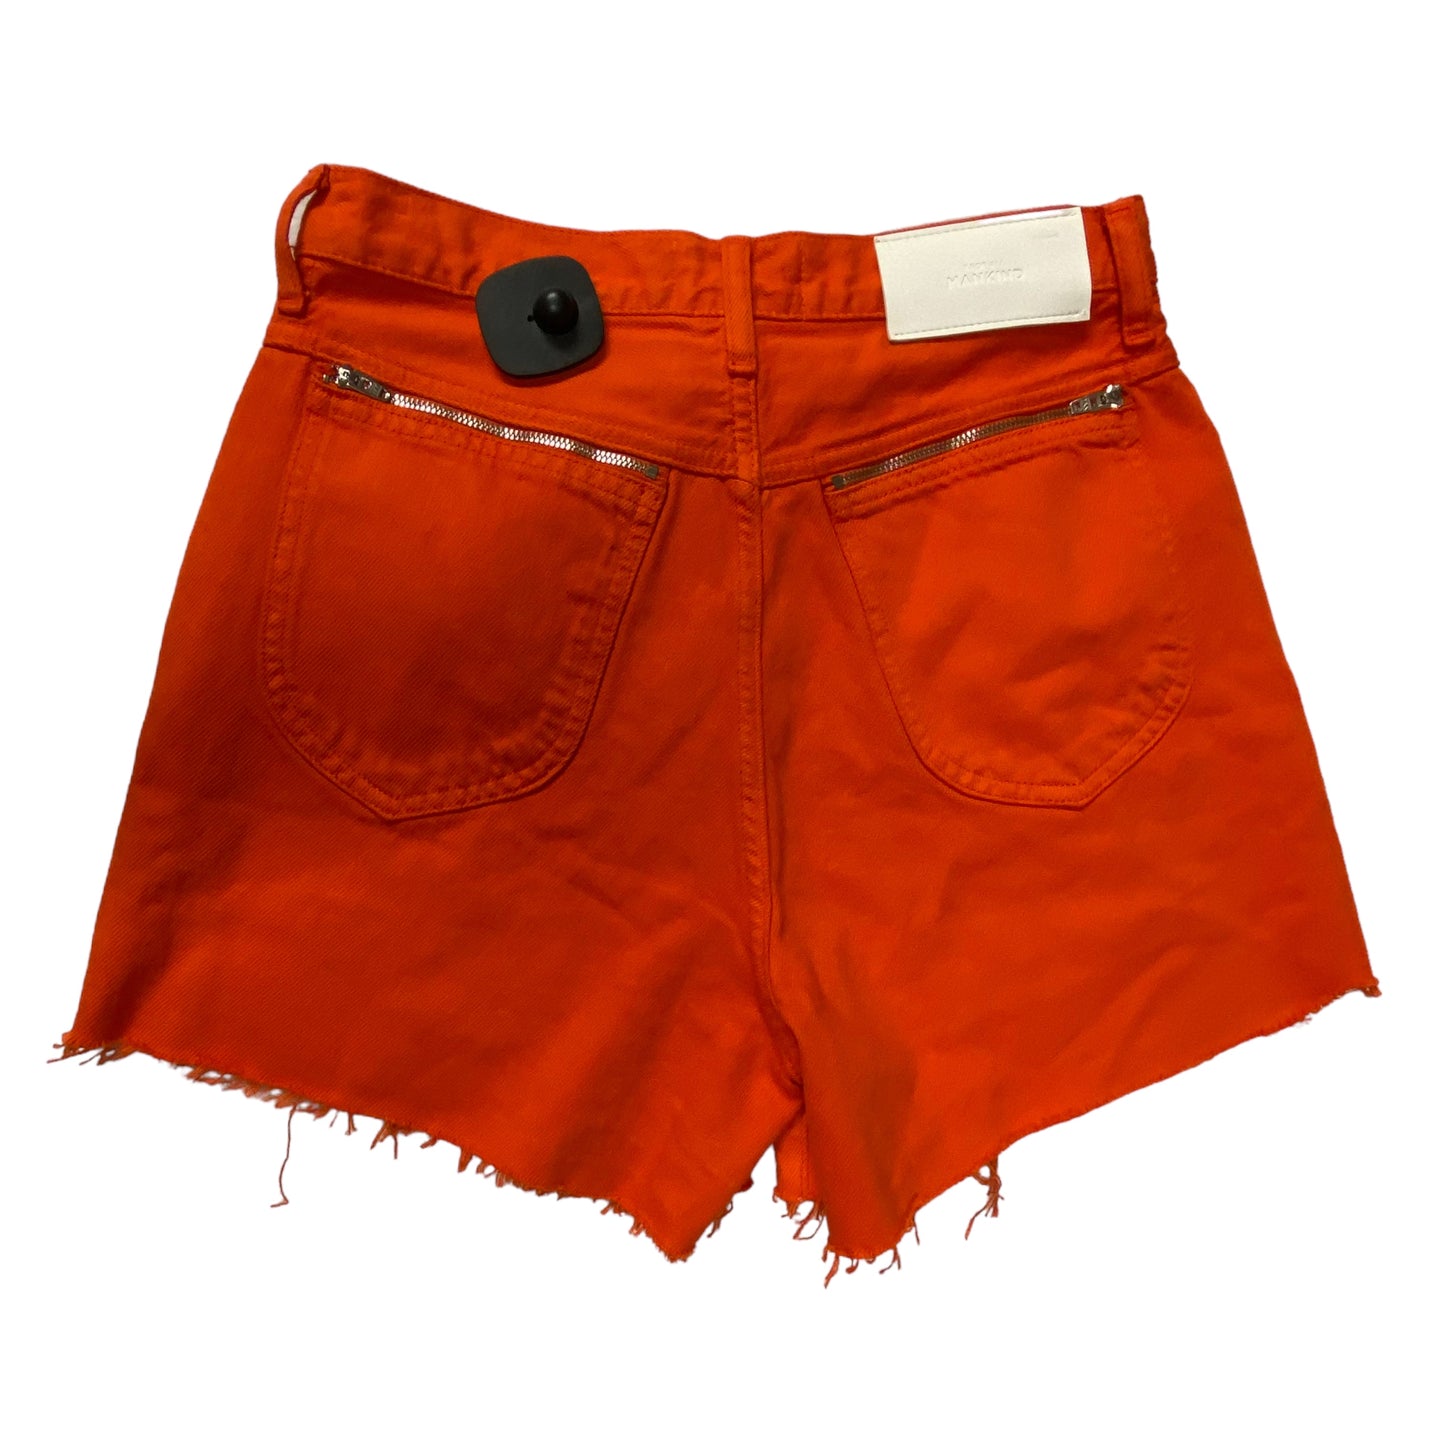 Orange Shorts 7 For All Mankind, Size 2